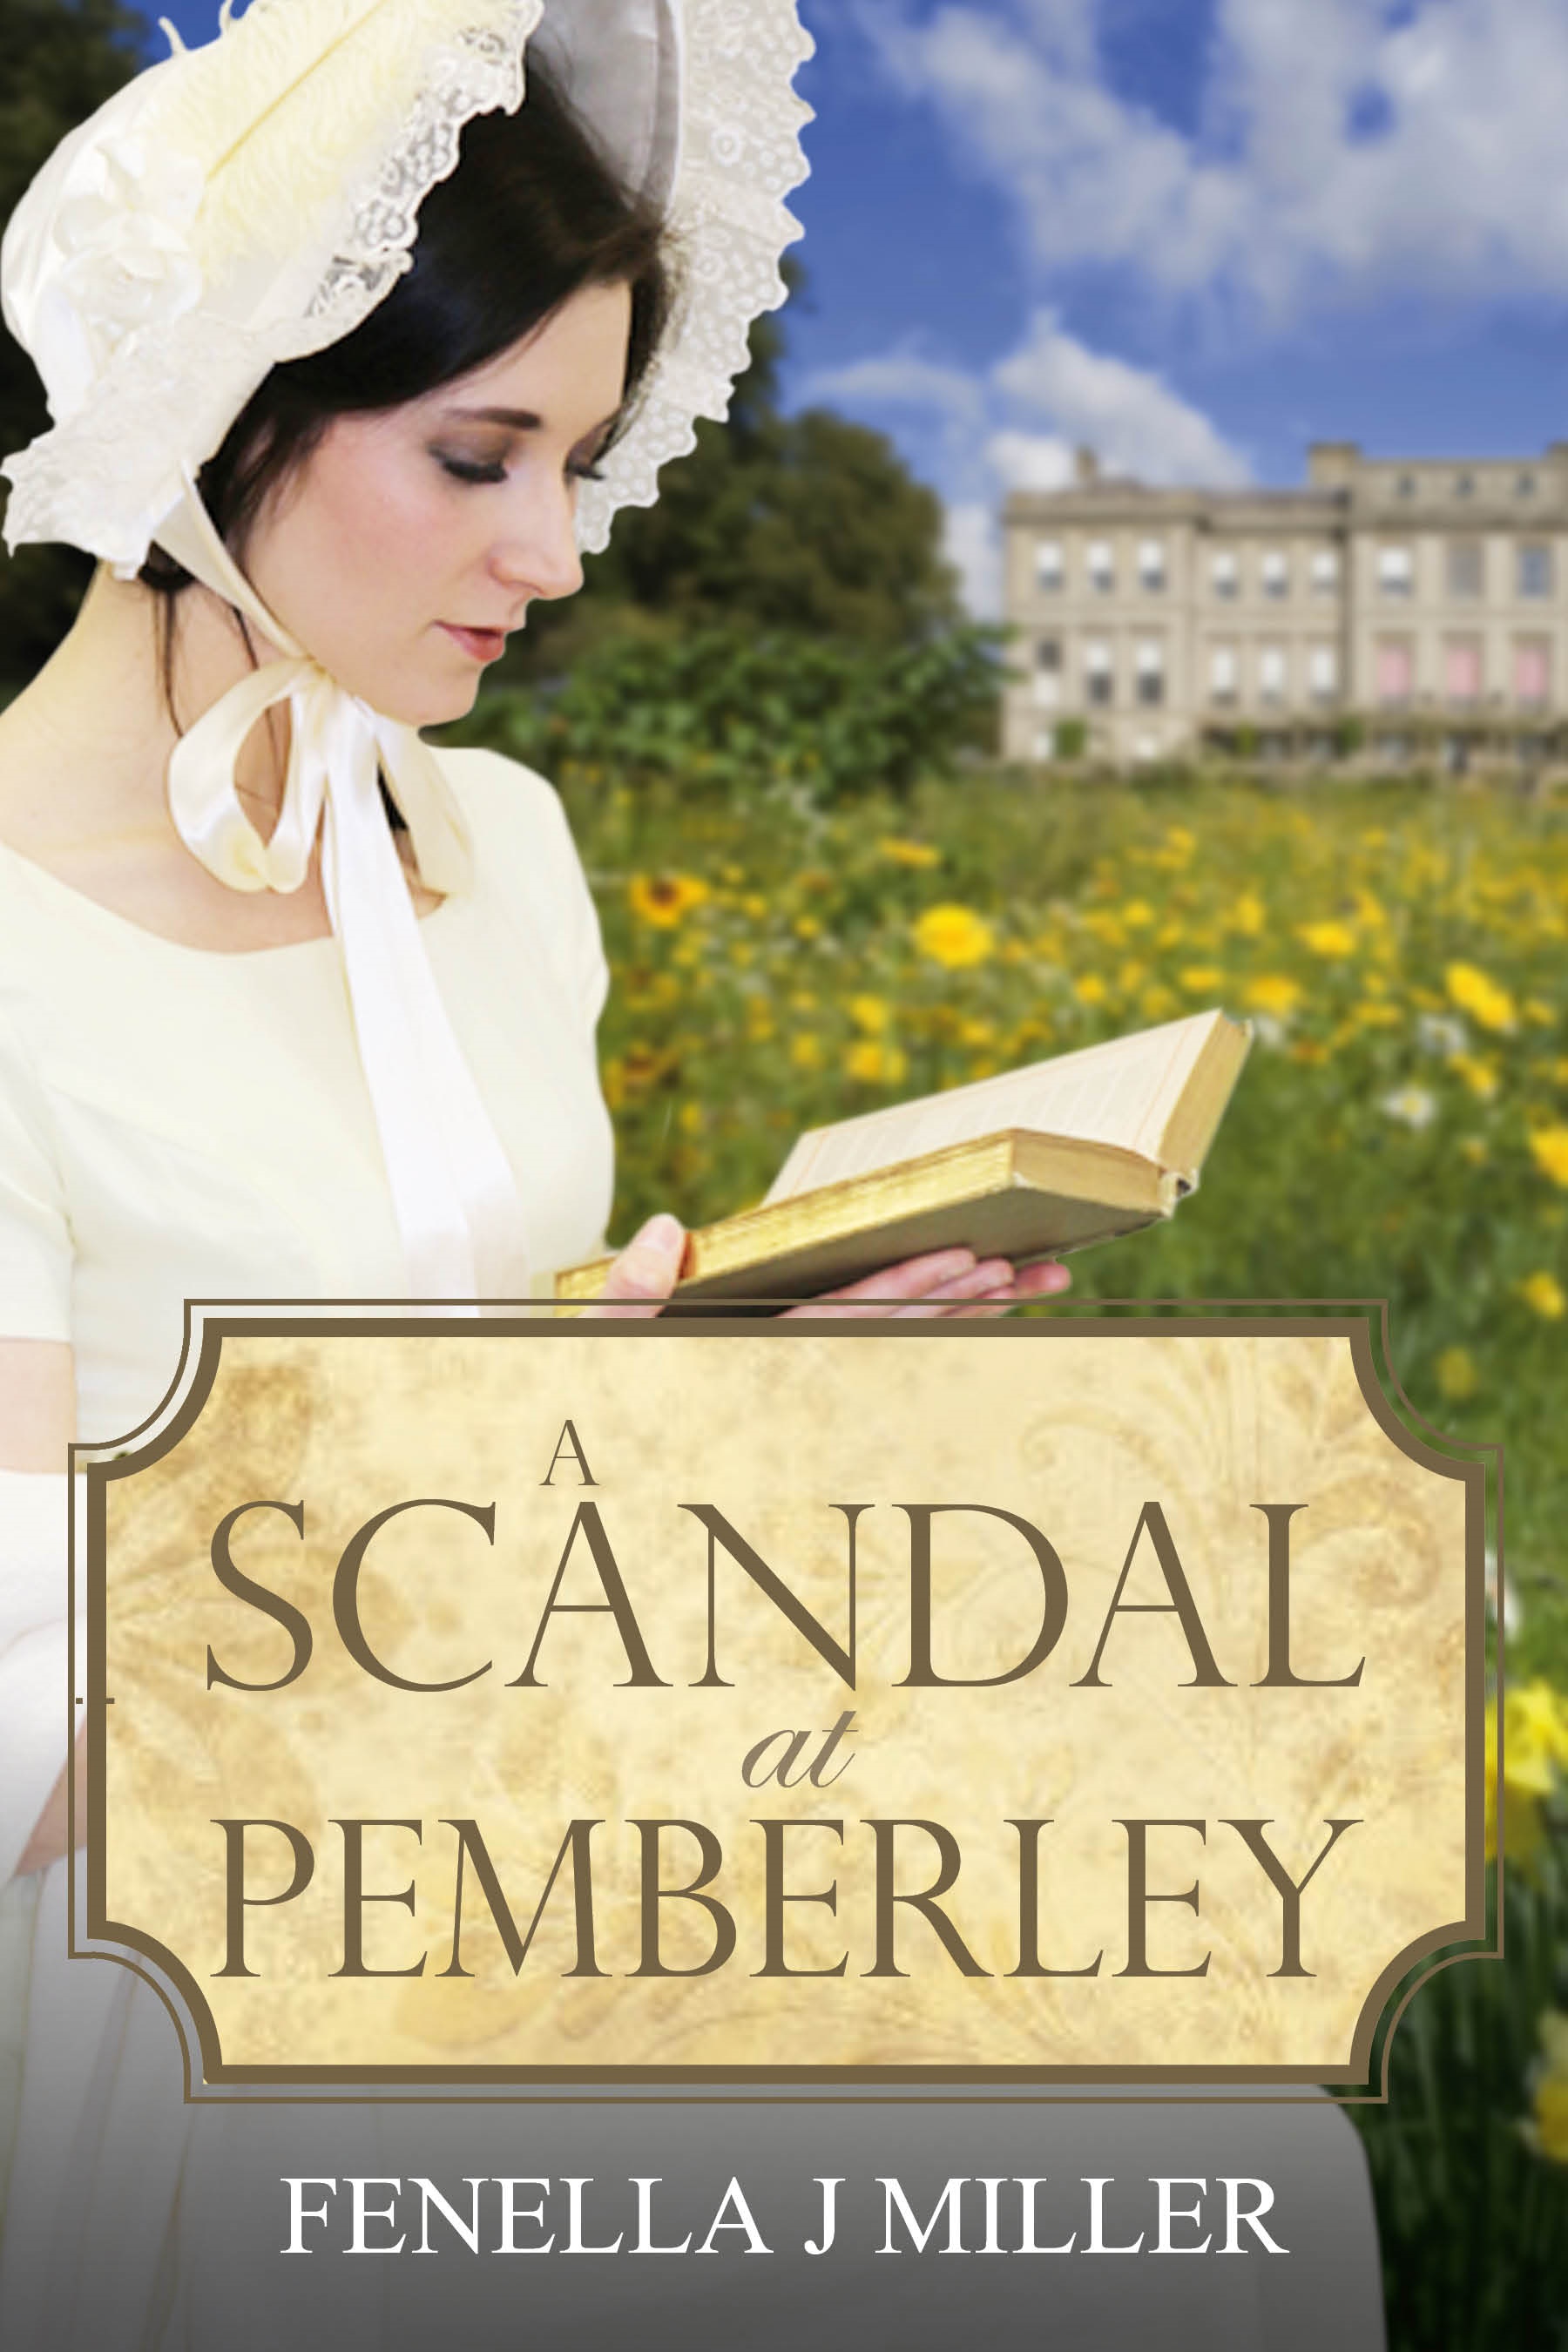 A Scandal At Pemberley